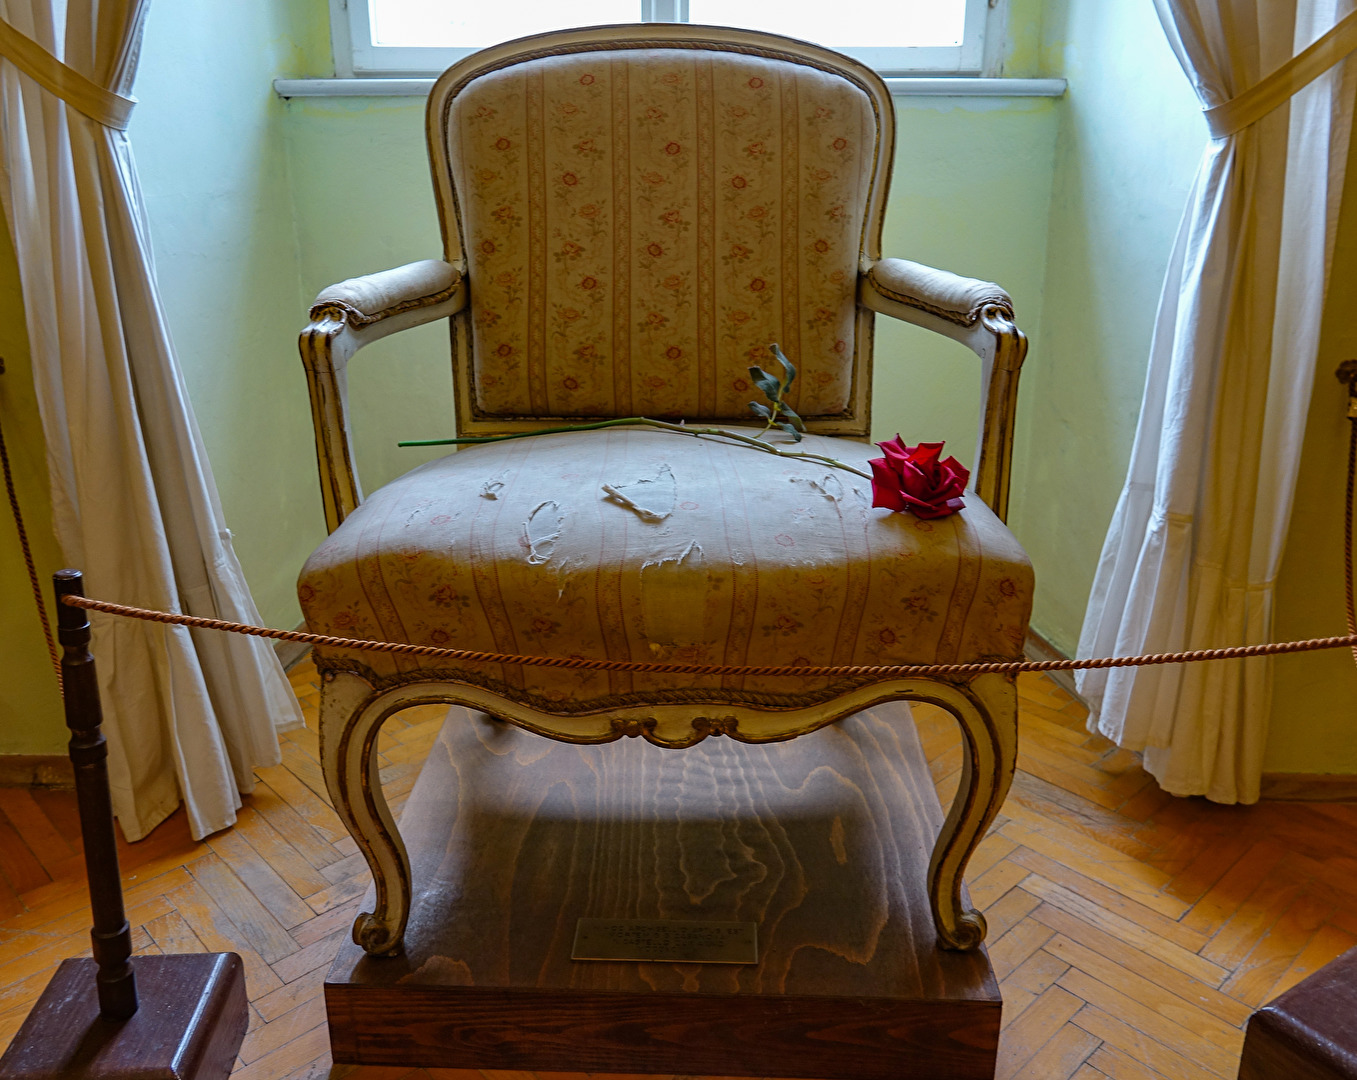 Giacomo Casanova starb auf diesem Stuhl